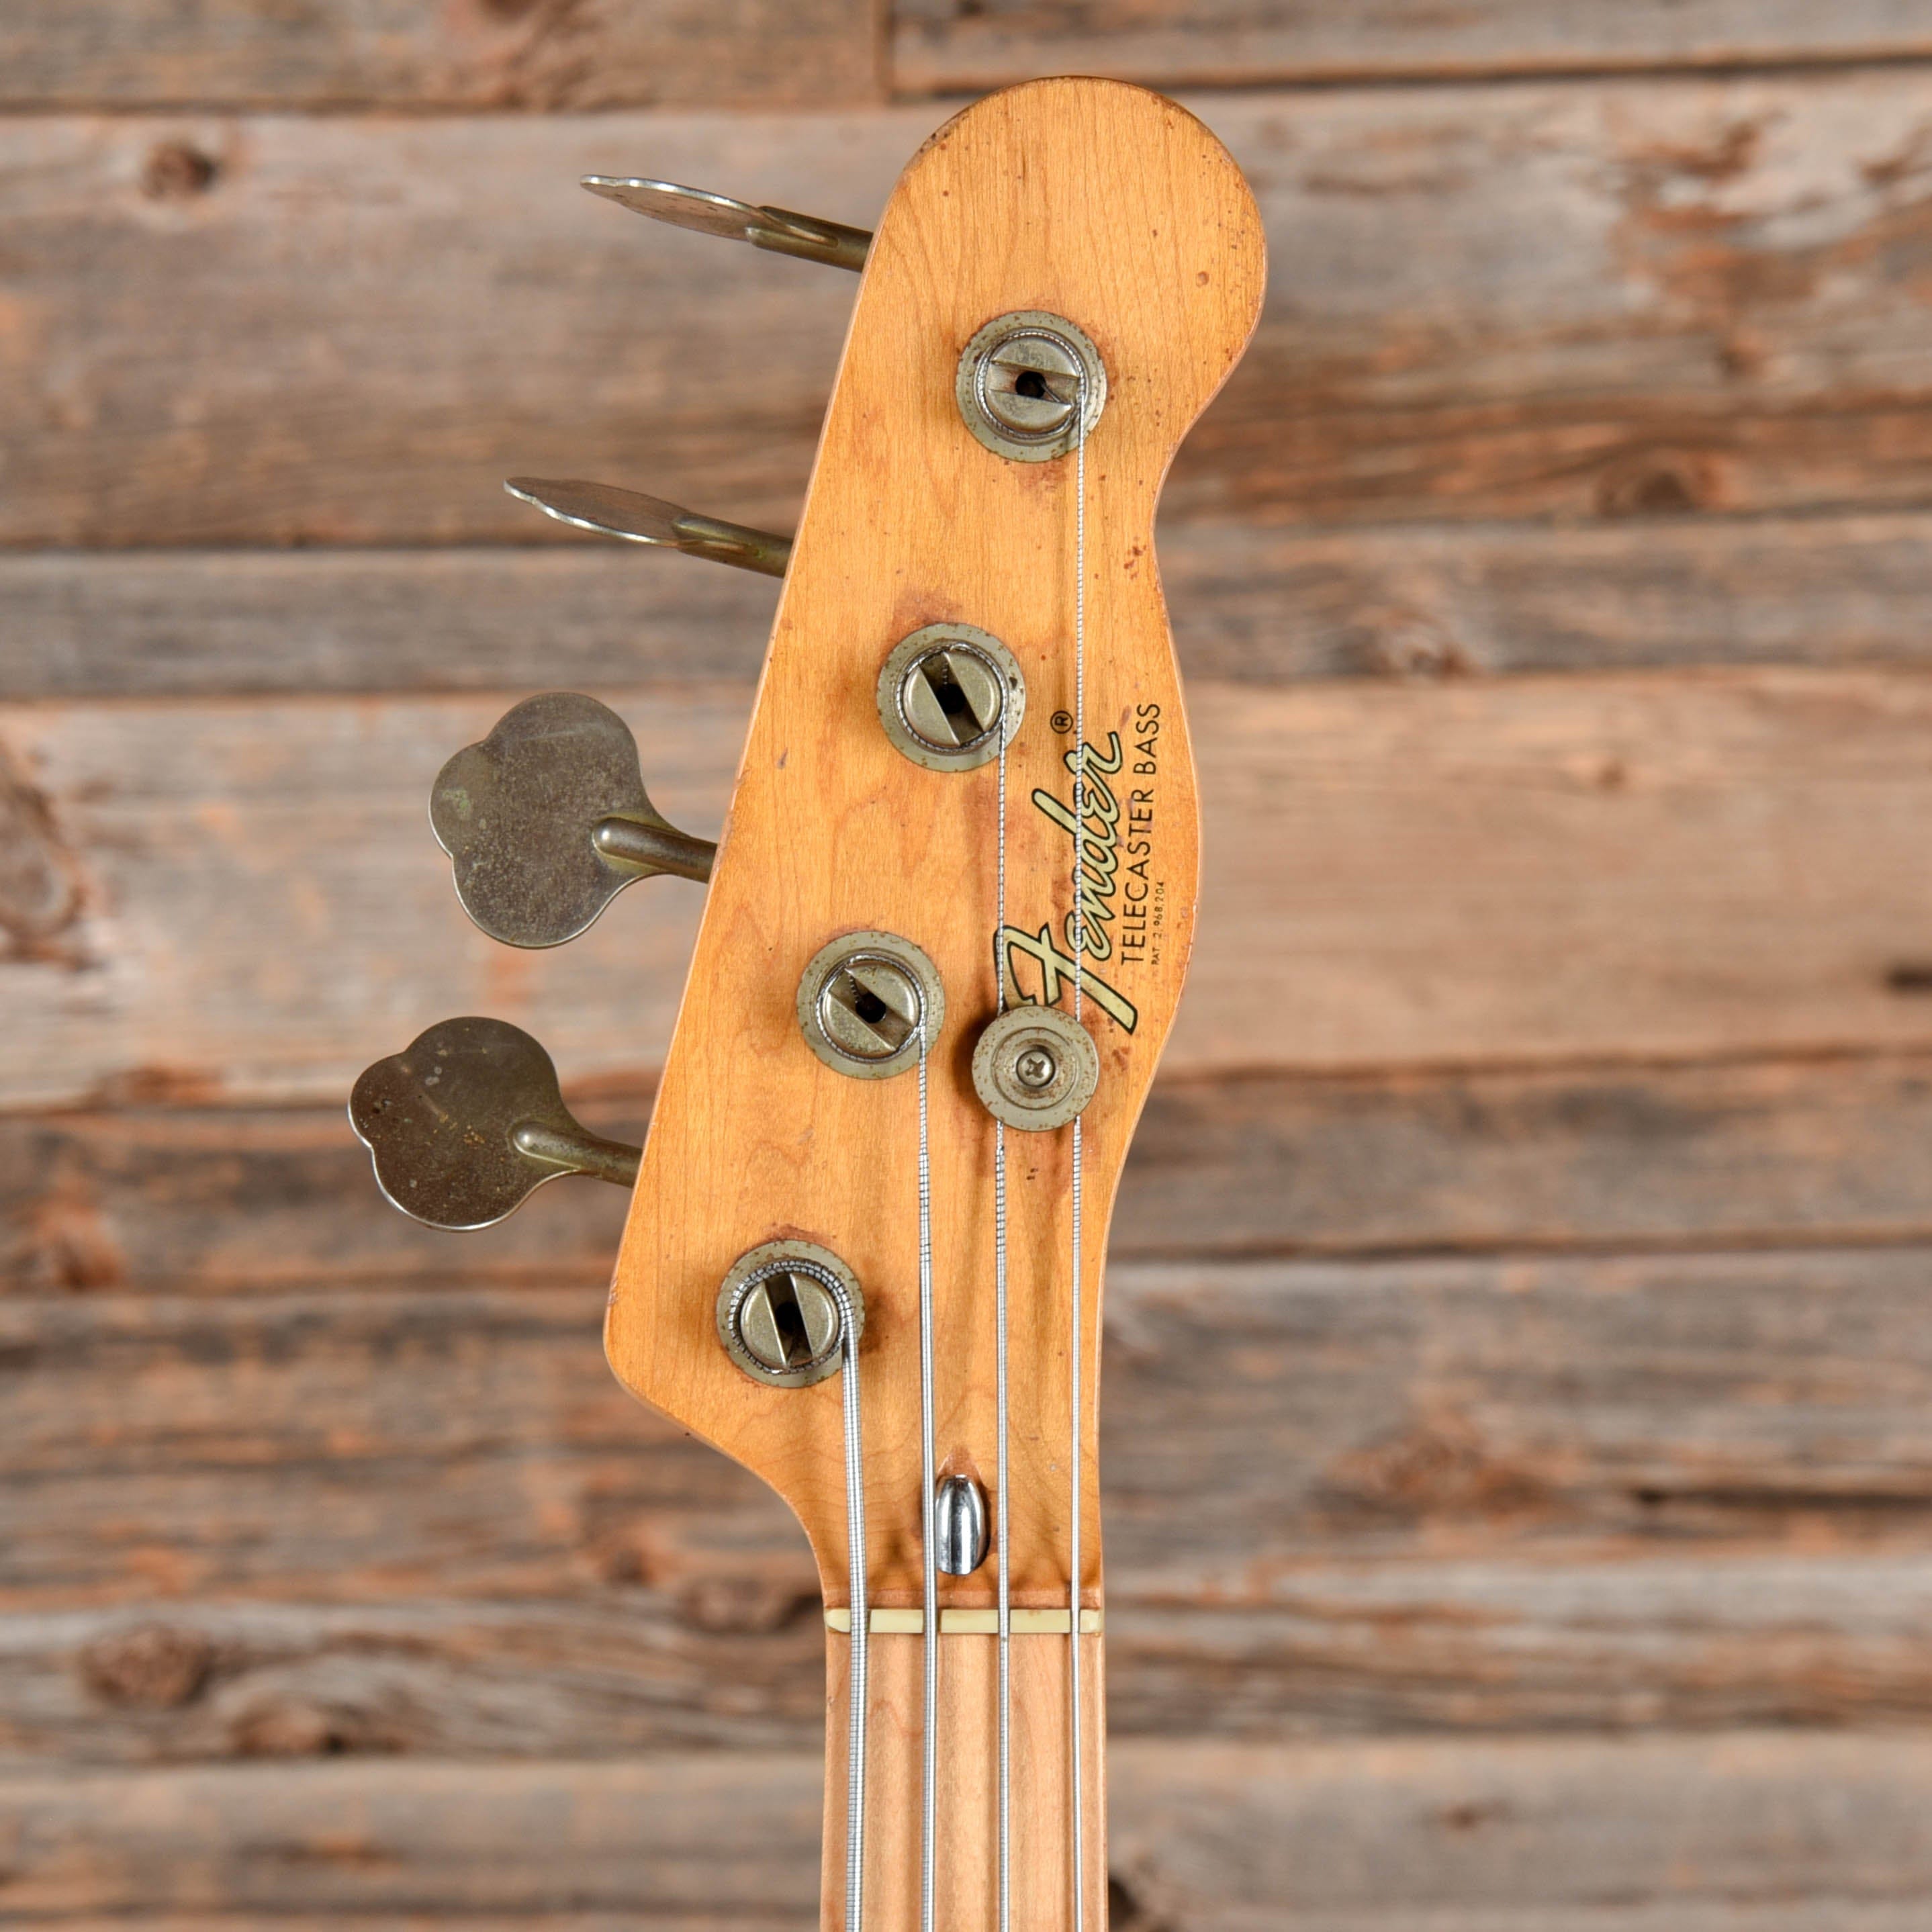 Fender Telecaster Bass Black 1975 Bass Guitars / 4-String